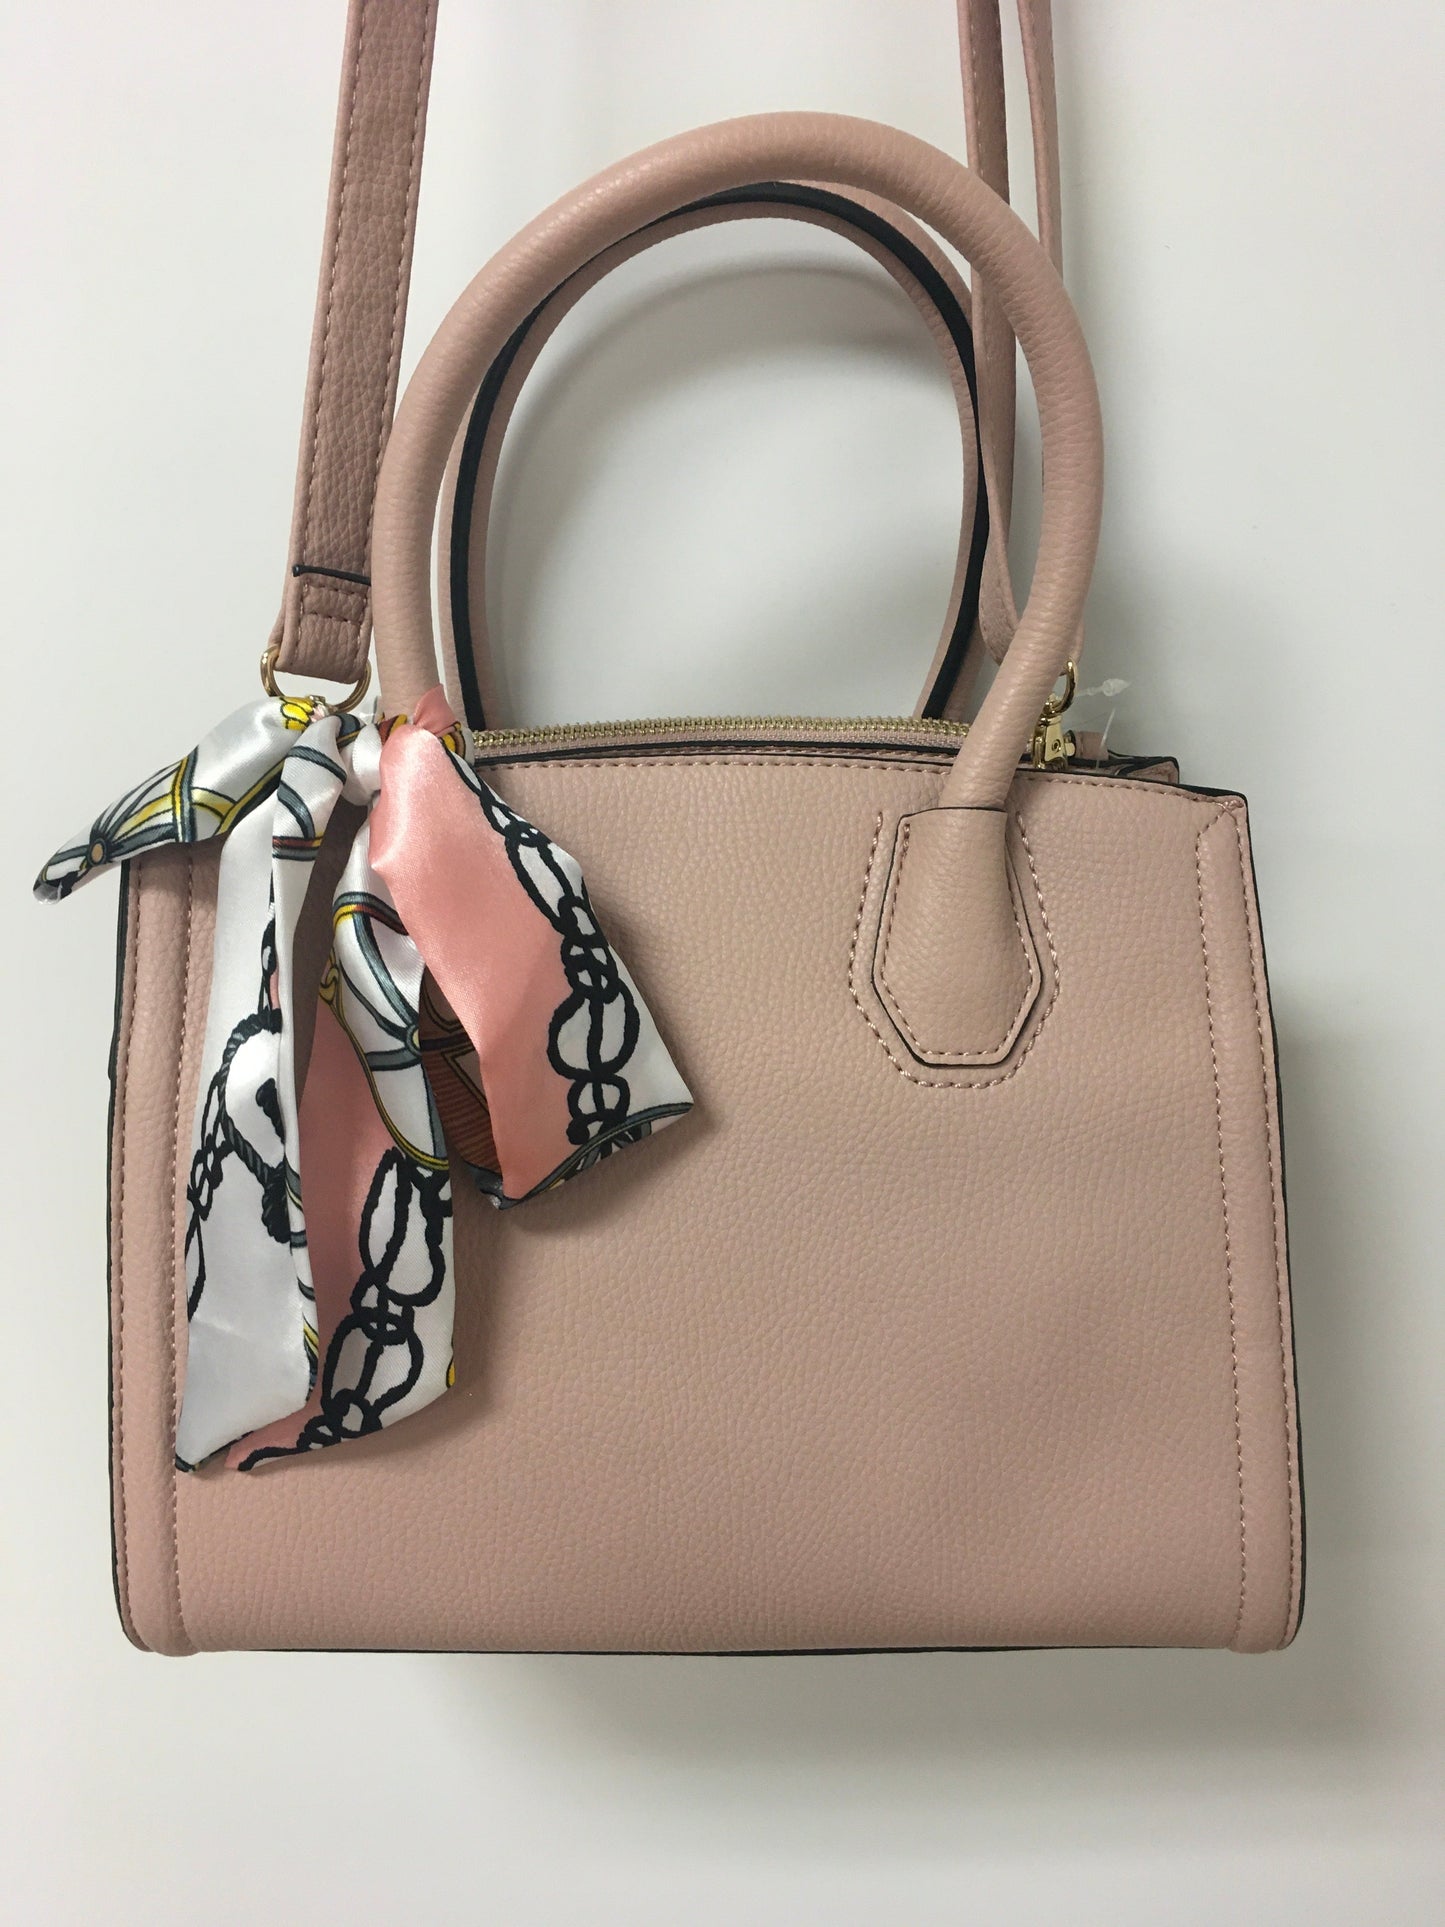 Handbag By Aldo  Size: Medium